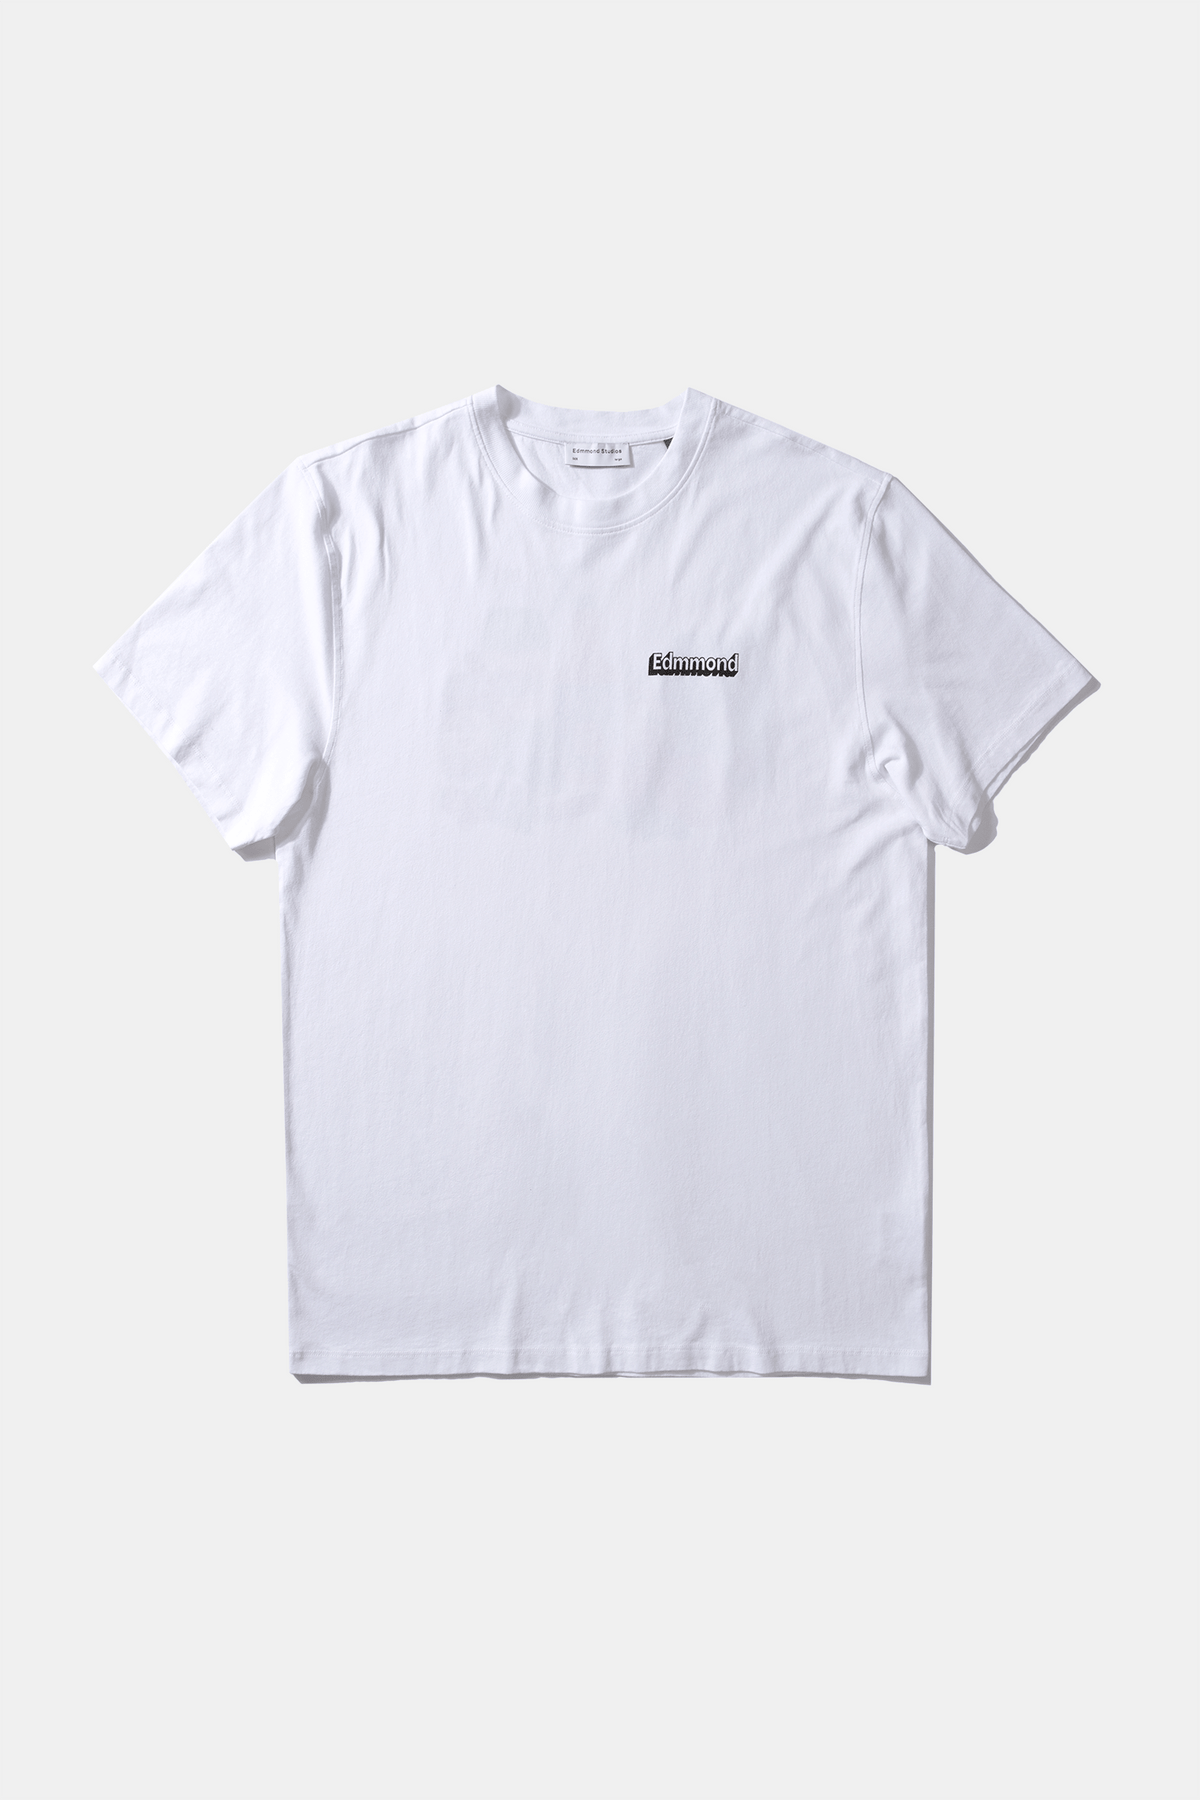 Pantry T-Shirt Plain White